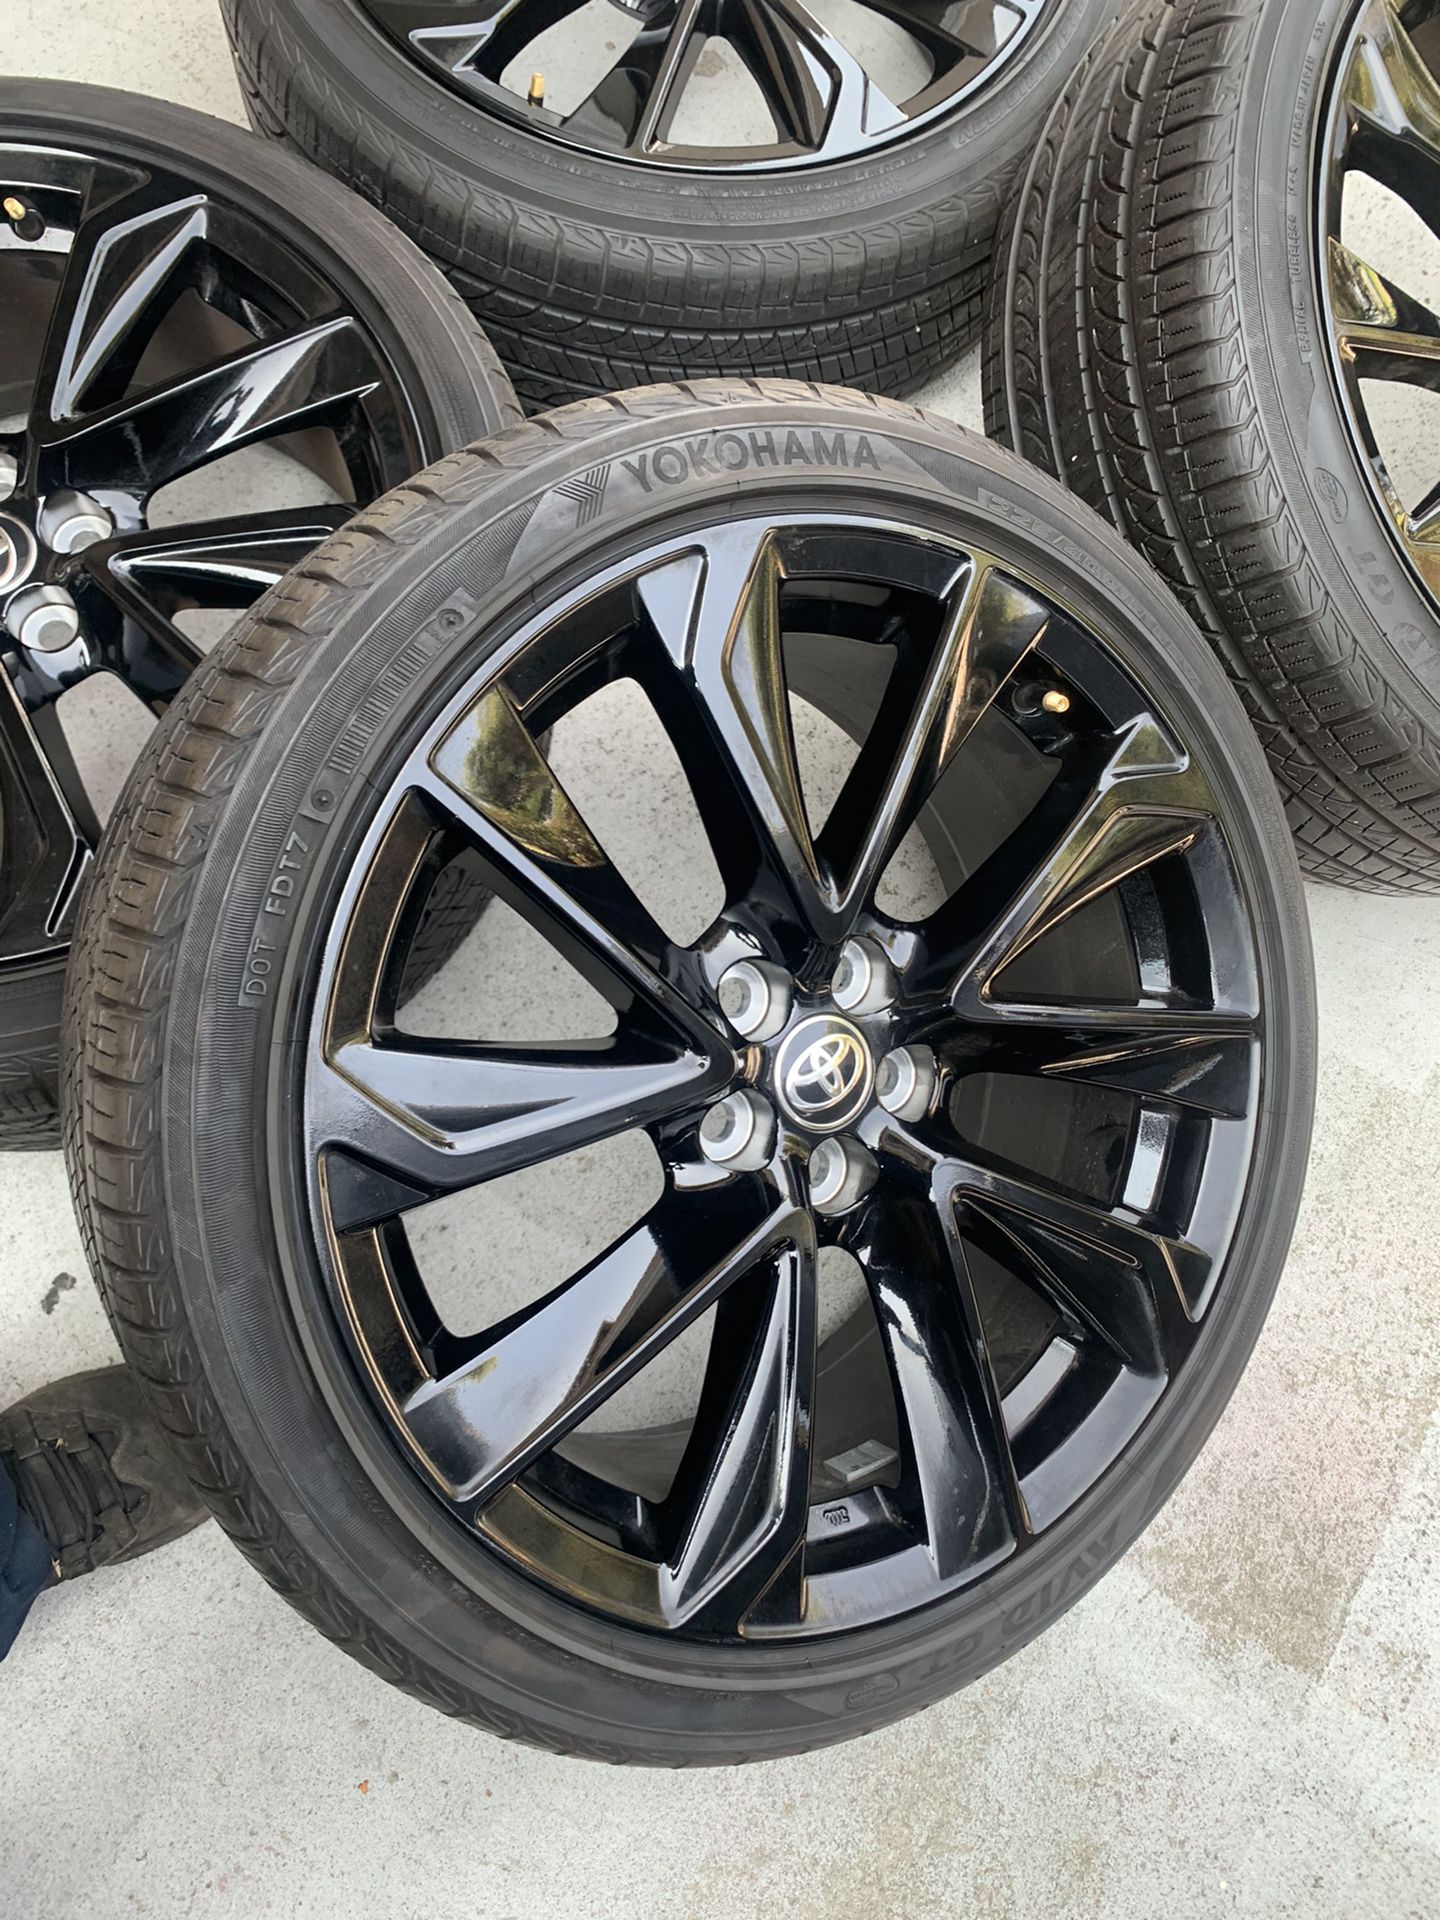 Toyota Corolla Rims And Tires 18” Original OEM Wheels Rines De Corolla New Gloss Black Powder Coated 